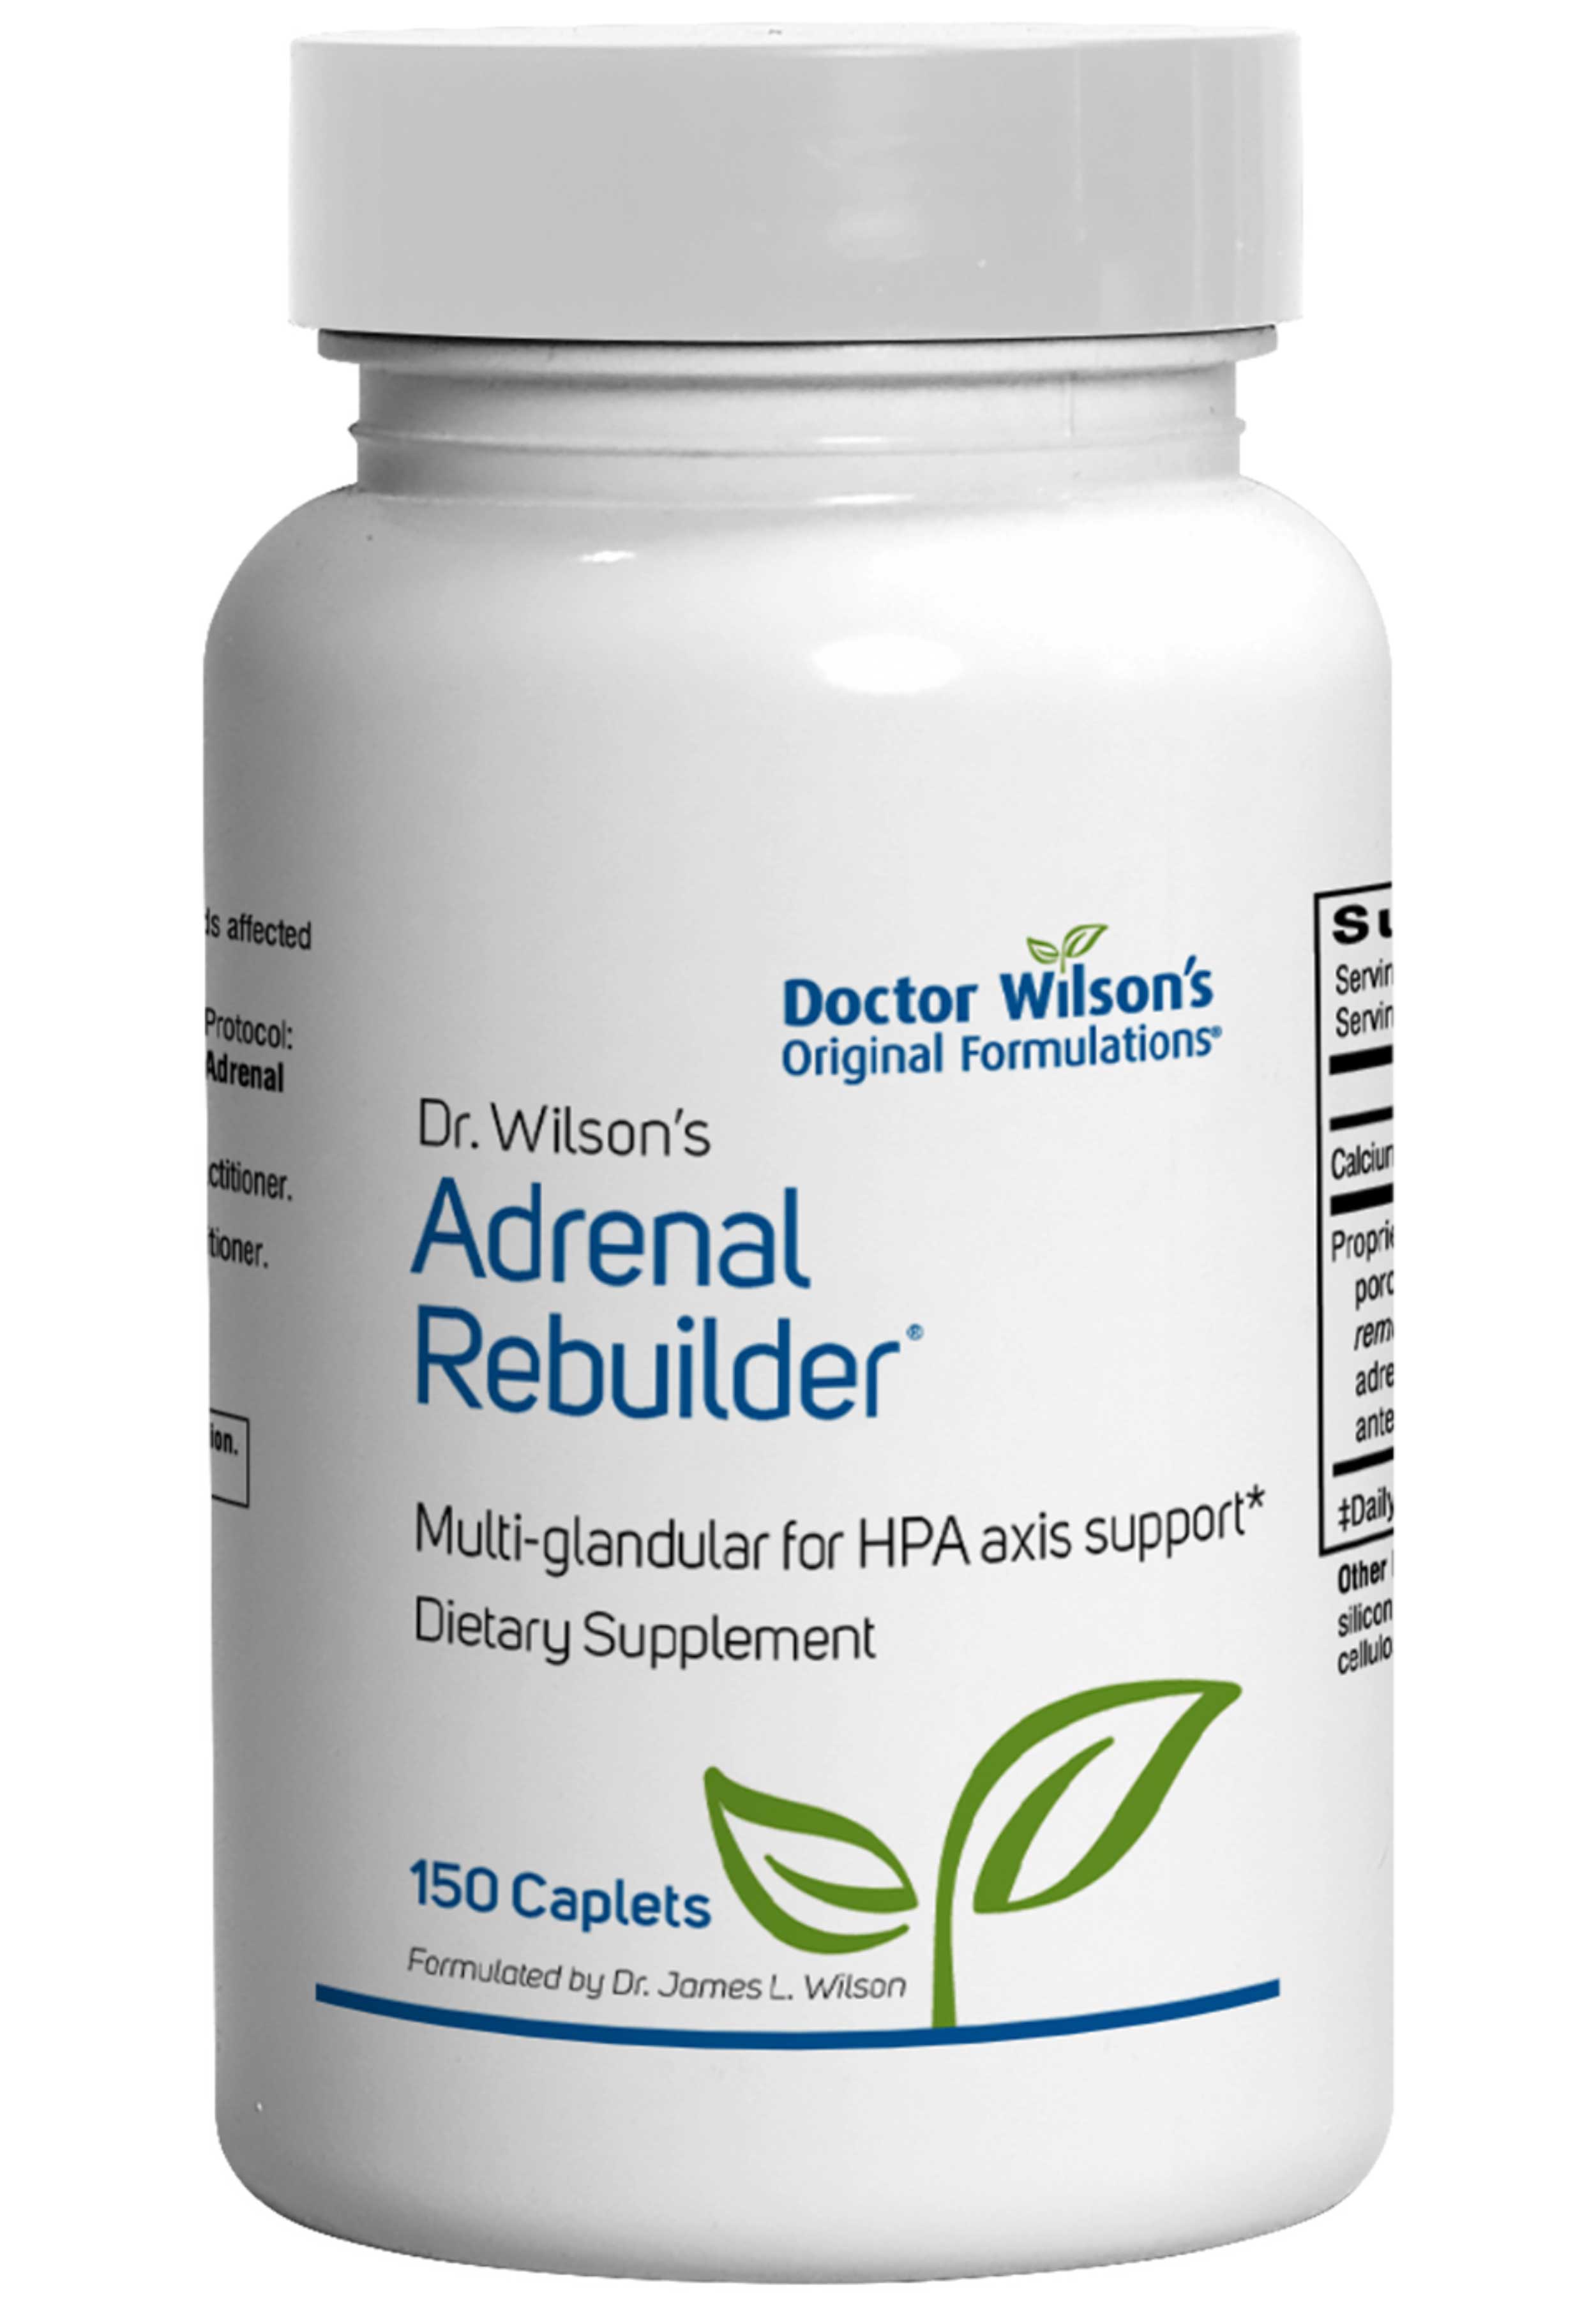 Doctor Wilson's Original Formulations Adrenal Rebuilder